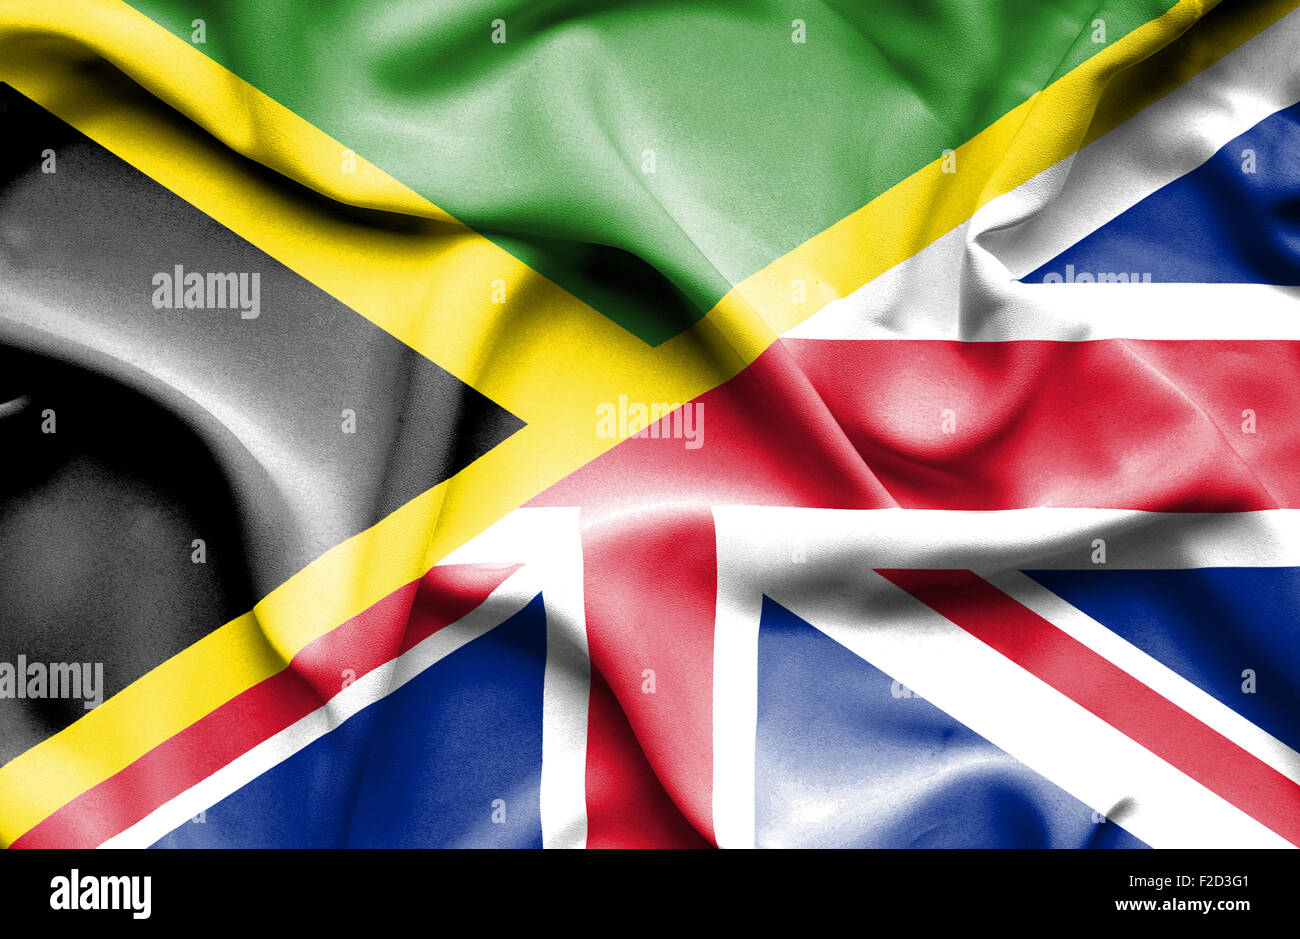 Waving flag of United Kingdom and Jamaica Stock Photo - Alamy